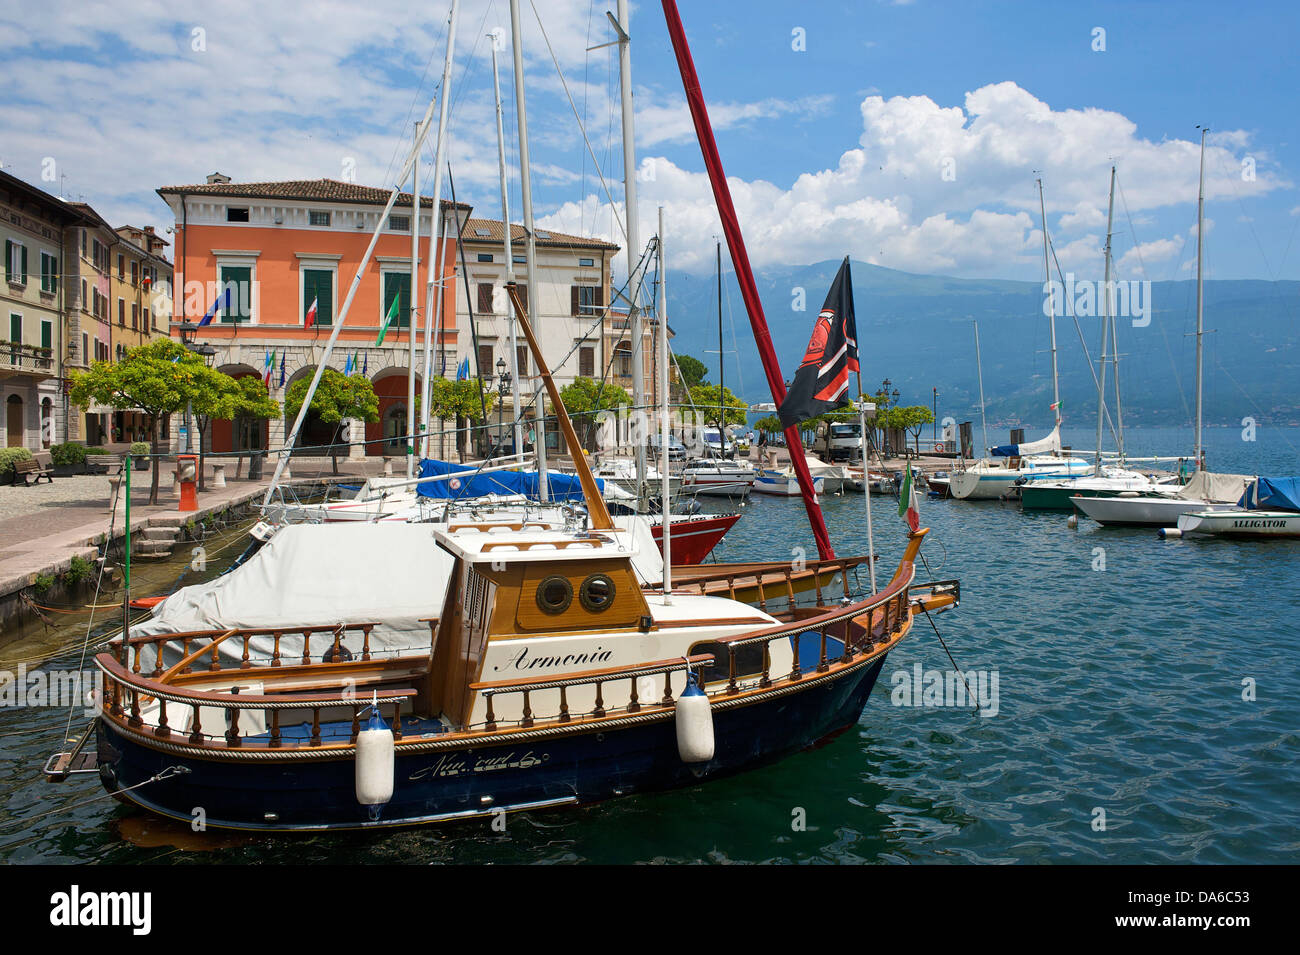 Il lago di Garda, Italia, Europa, Lago di Garda, Gardone Riviera, vacanza nave, barca vacanze, vacanze navi, barche vacanze, barche, barche Foto Stock